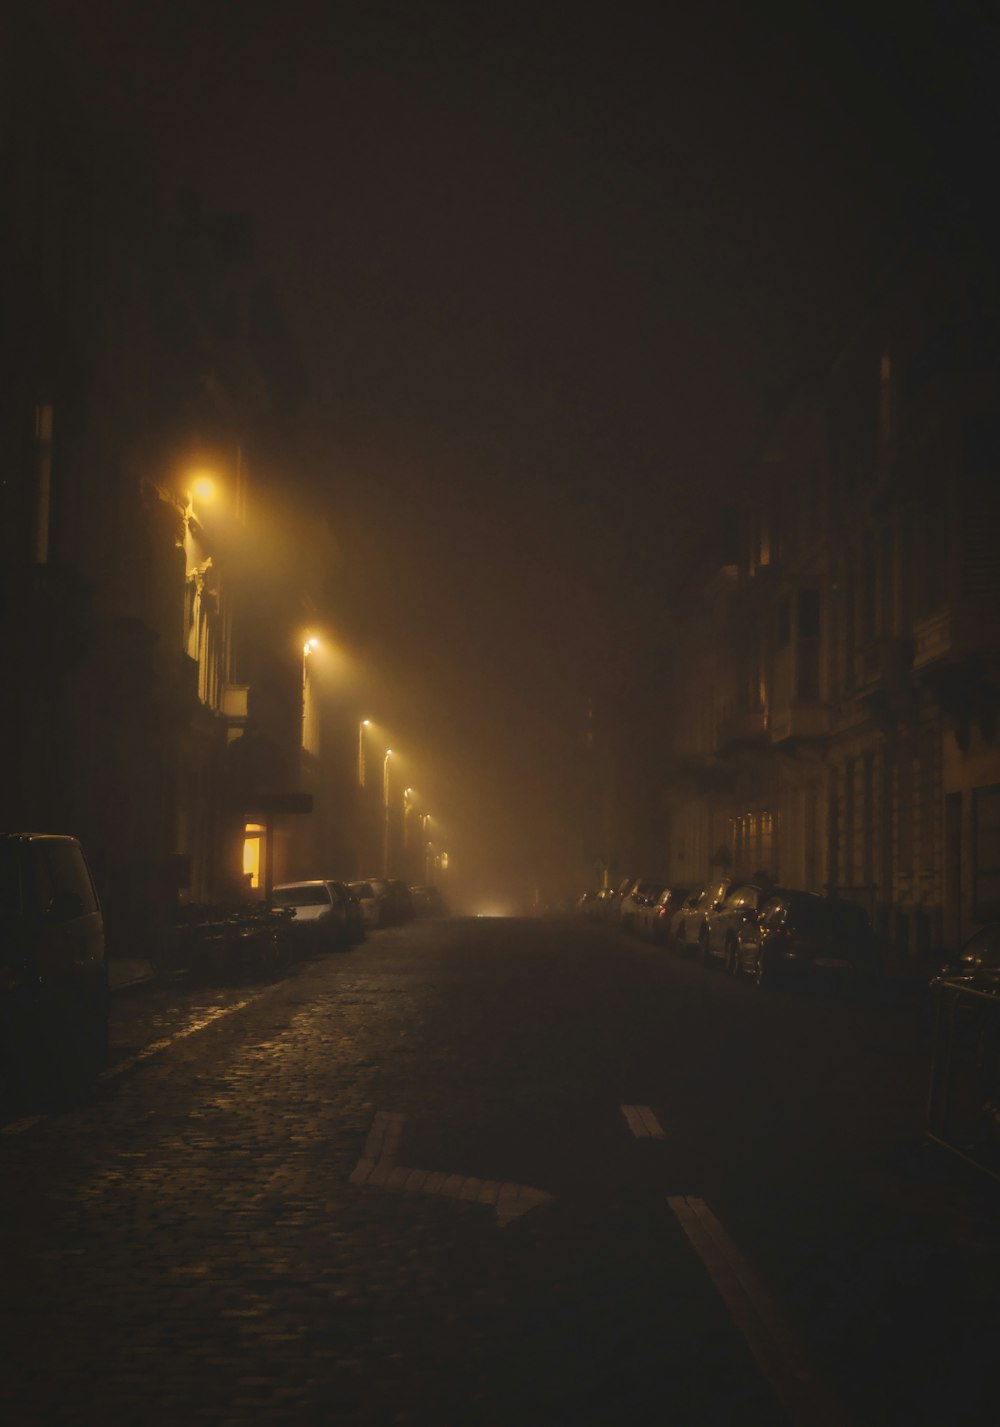 lâmpadas de rua acesas durante a noite